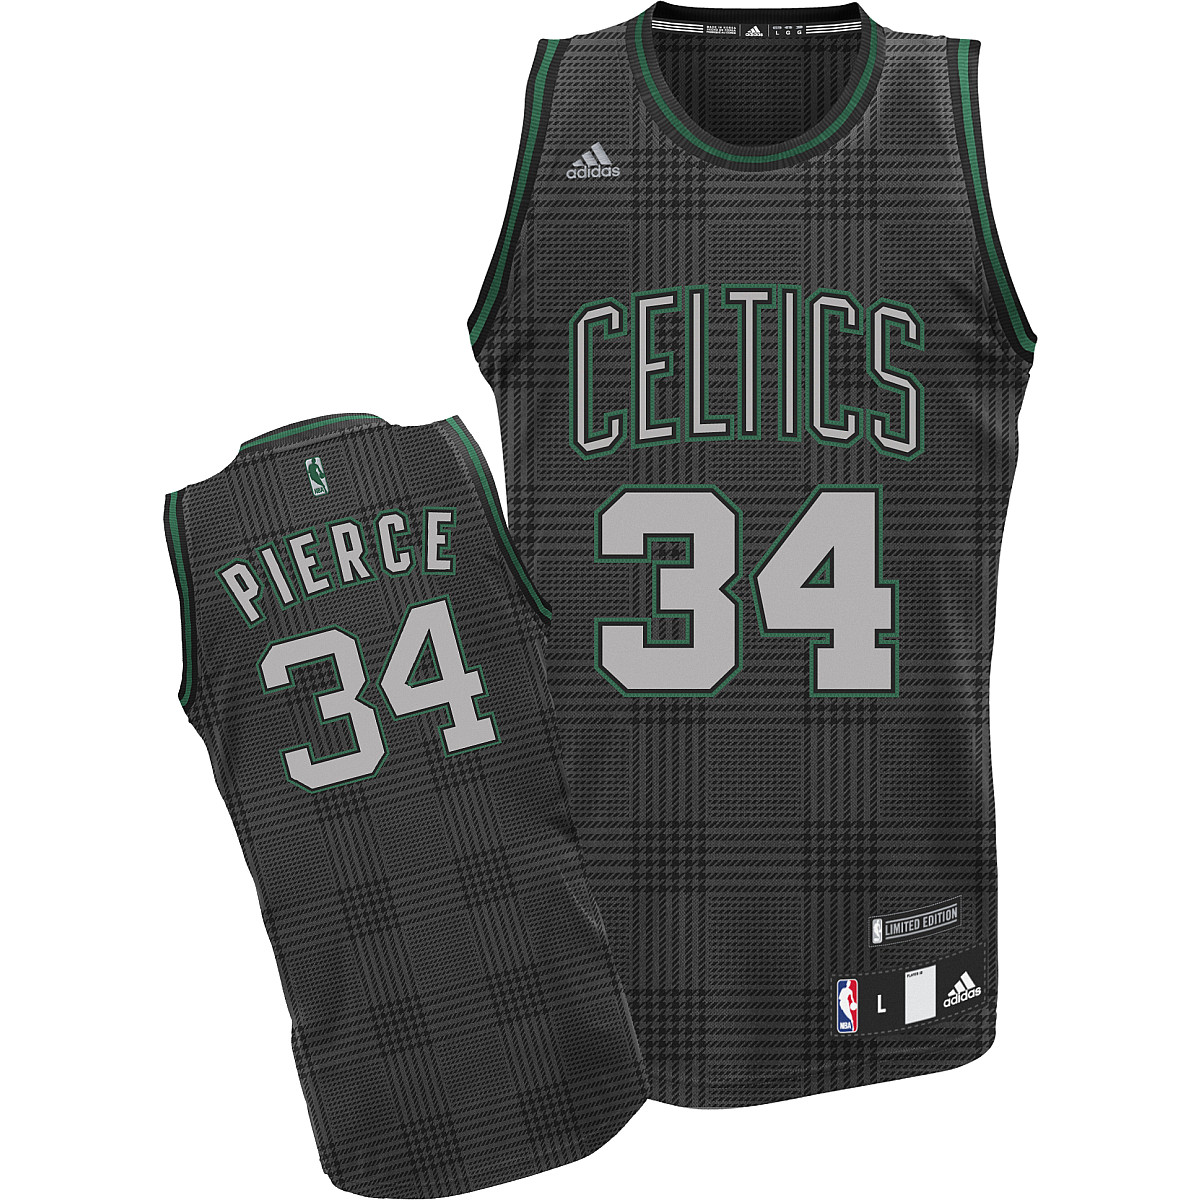 Celtics 34 Pierce Grey Jerseys